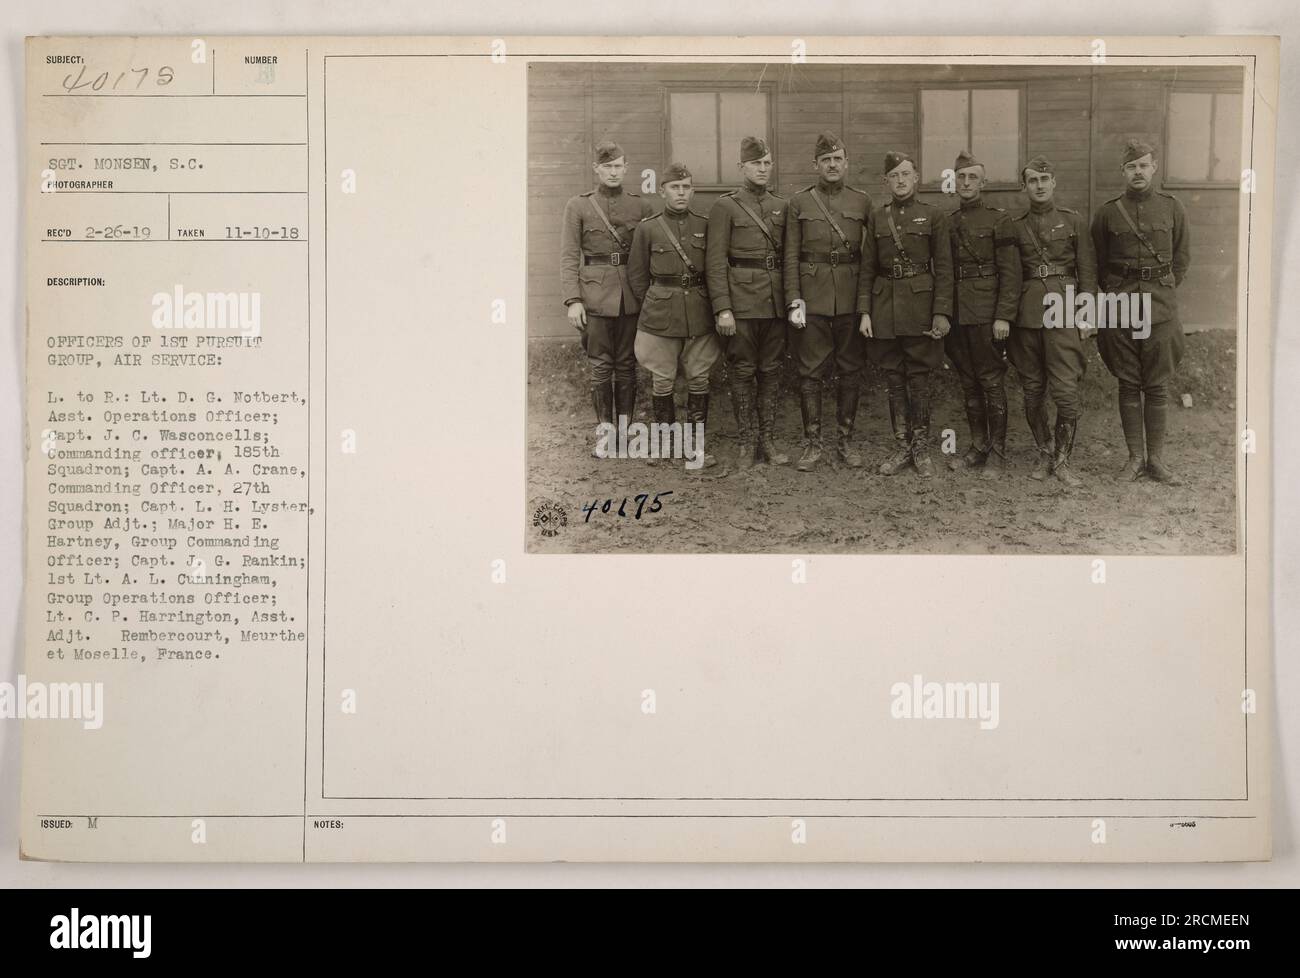 Una fotografia della prima guerra mondiale che mostra gli ufficiali del 1st Pursuit Group, Air Service. Da sinistra a destra: Tenente D. G. Hotbert, Asst. Operations Officer; Capt. J. C. Wasconcells, Commanding Officer del 185th Squadron; Capt. A. Crane, Commanding Officer del 27th Squadron; Capt. L. H. Lyster, Group Adjt.; Major H. E. Hartney, Group Commanding Officer; Capt. J. G. Rankin; 1st Lt. A. L. Cunningham, Group Operations Officer; Tenente C. P. Harrington, Asst. Ad jt. Presa il 10 novembre 1918 a Rembercourt, Meurthe et Moselle, Francia. Foto Stock